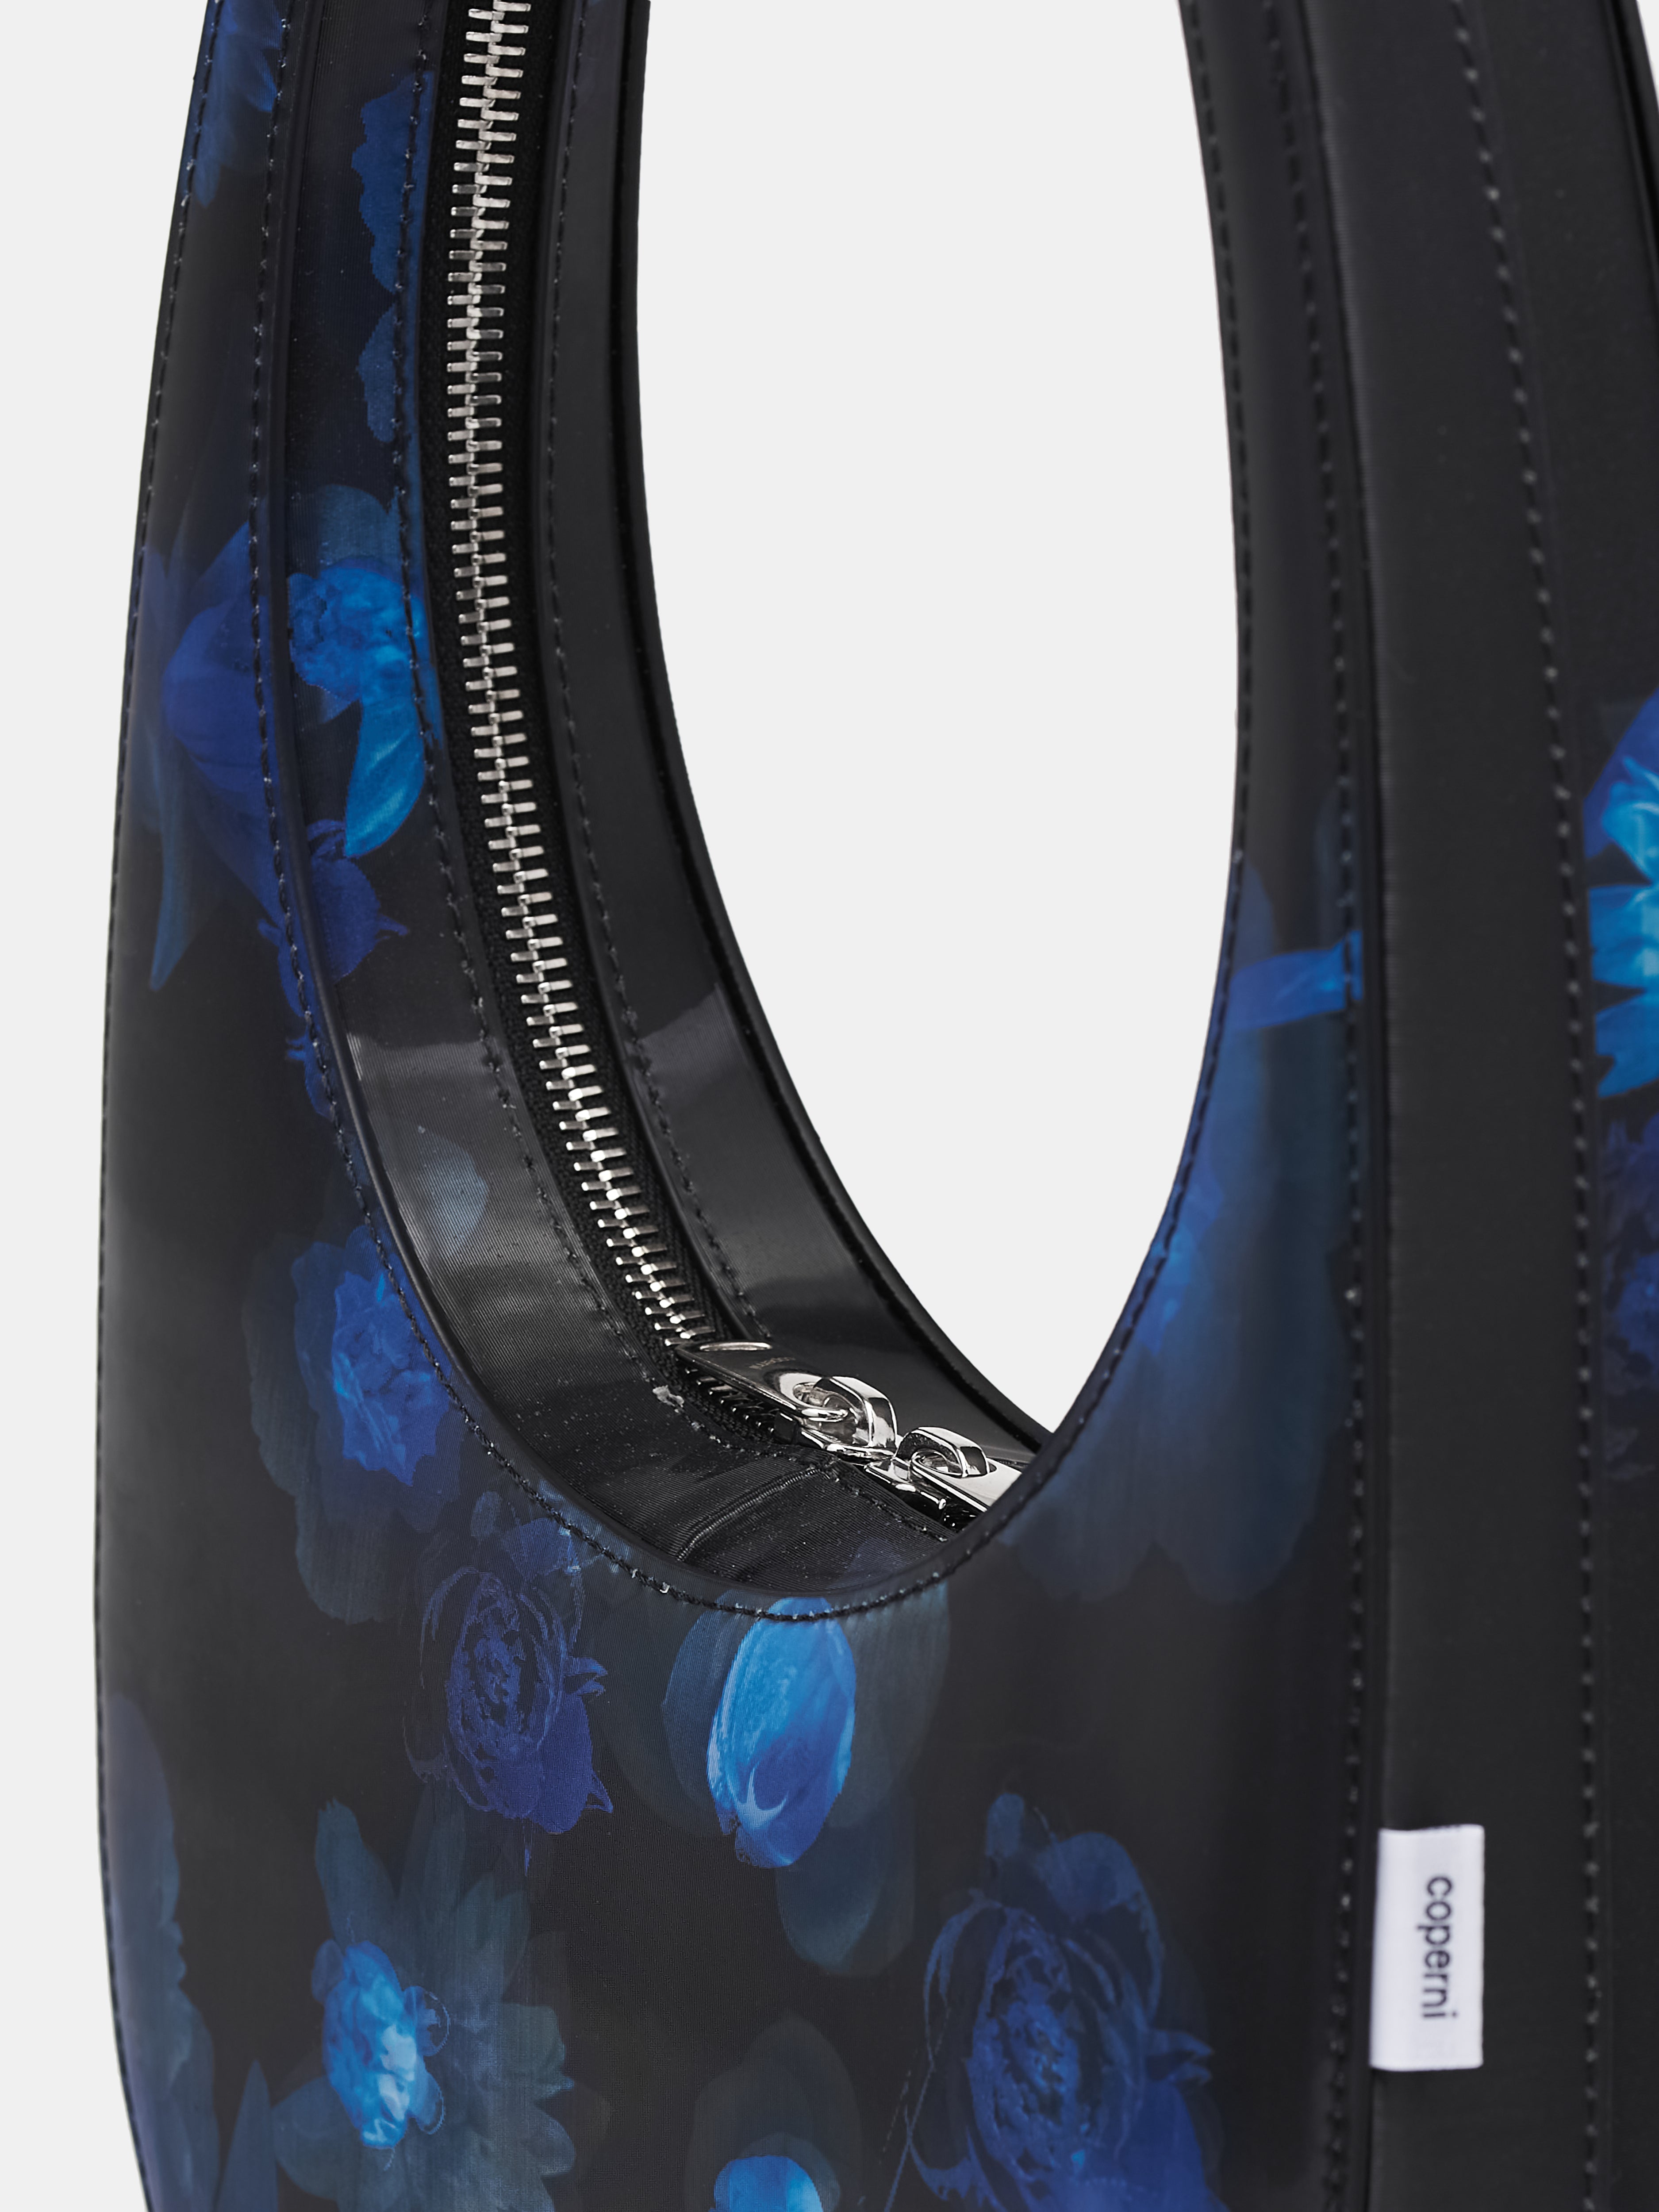 Holographic Swipe Bag (COPBA01223-BLUE-BLACK)